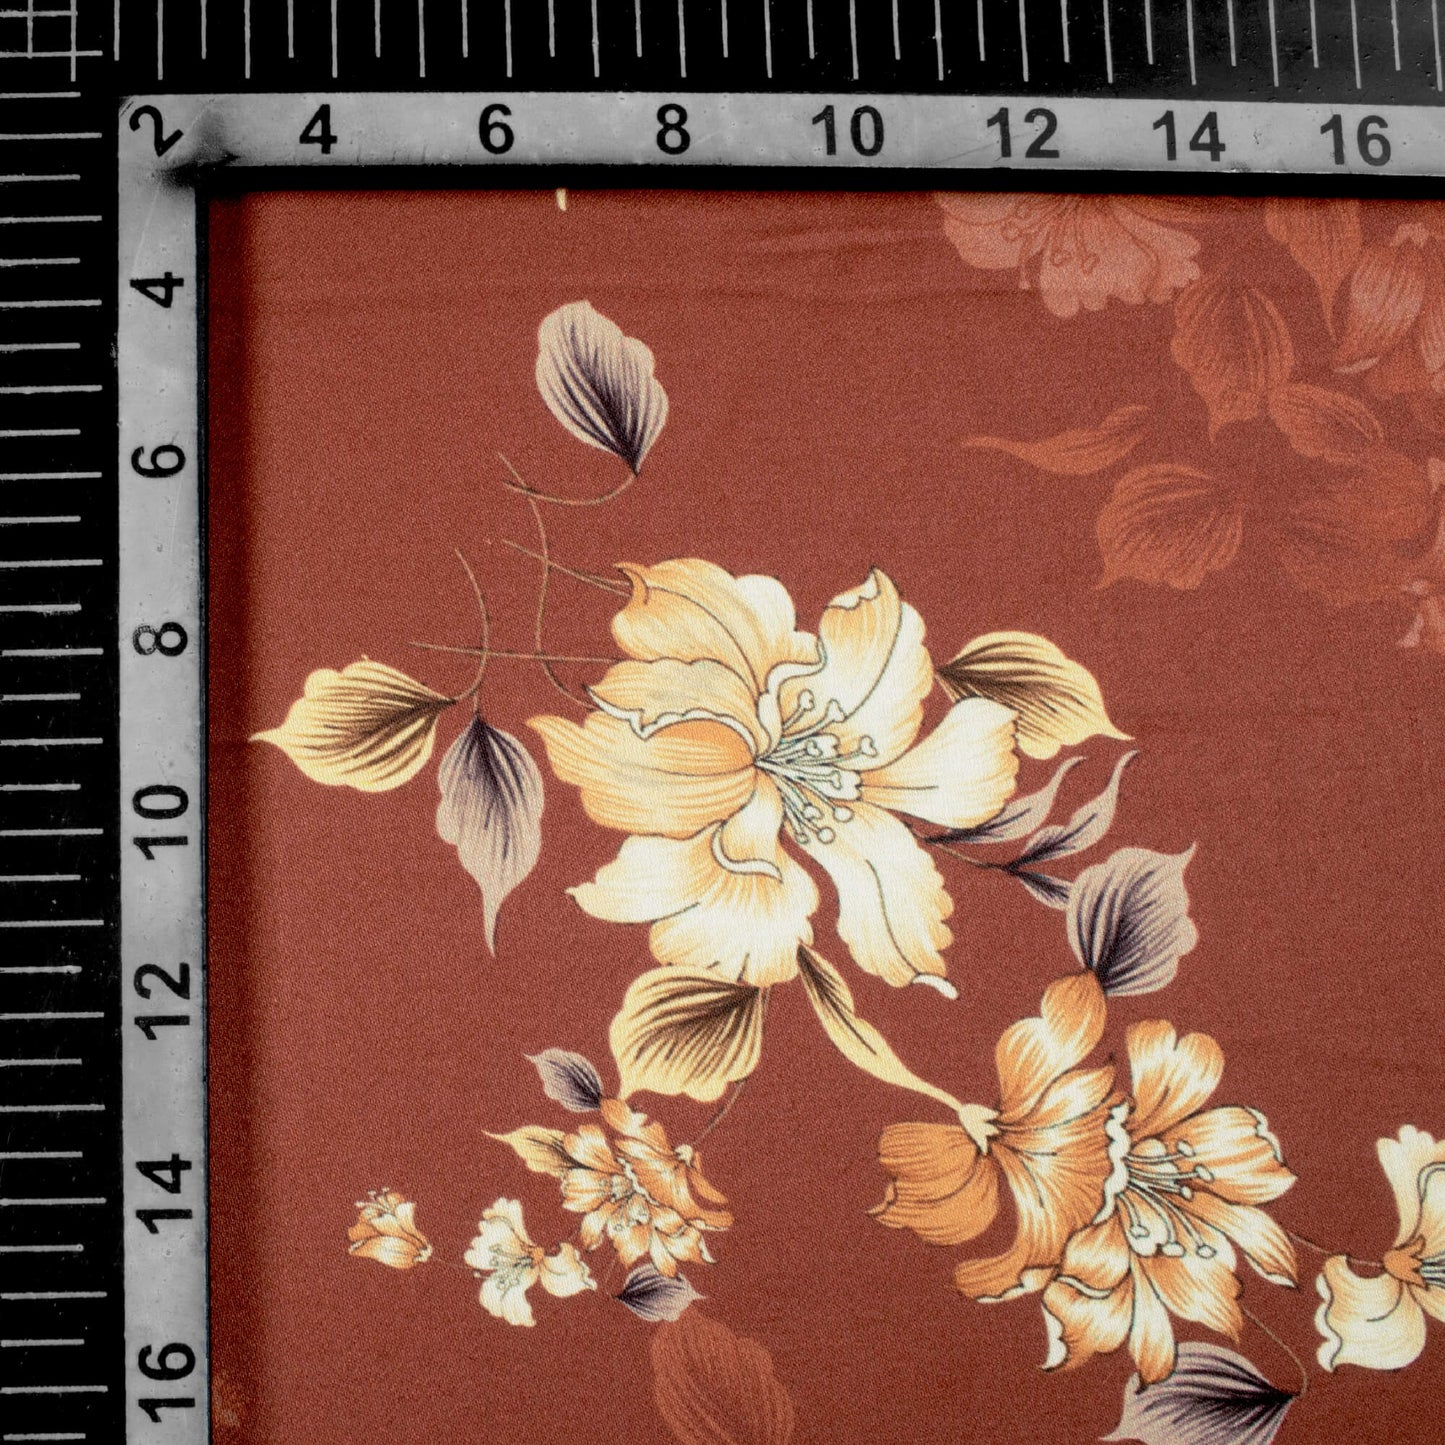 Seal Brown And White Floral Pattern Digital Print Premium Lush Satin Fabric